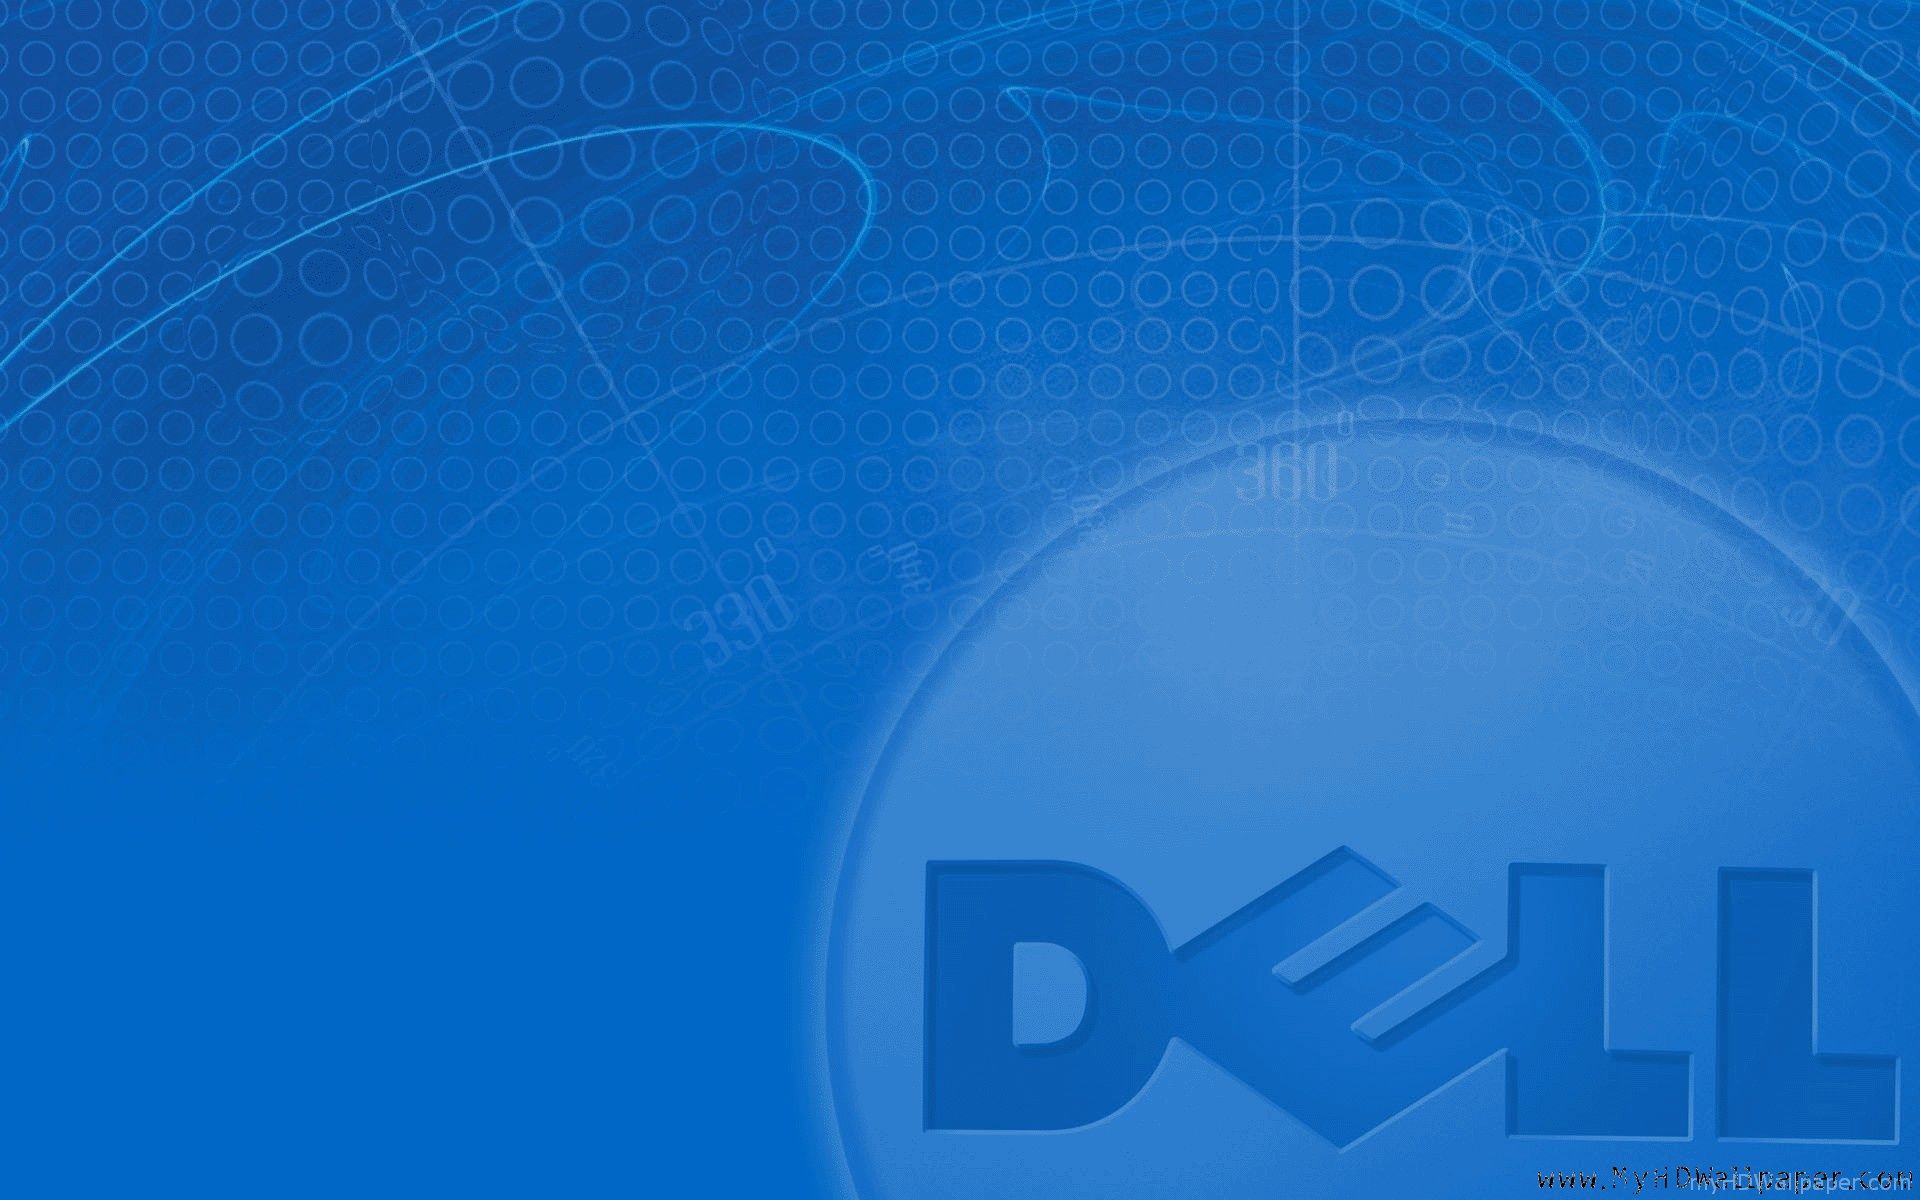  Dell Hintergrundbild 1920x1200. Dell Suche Hintergrundbilder. Dell Suche Frei Fotos